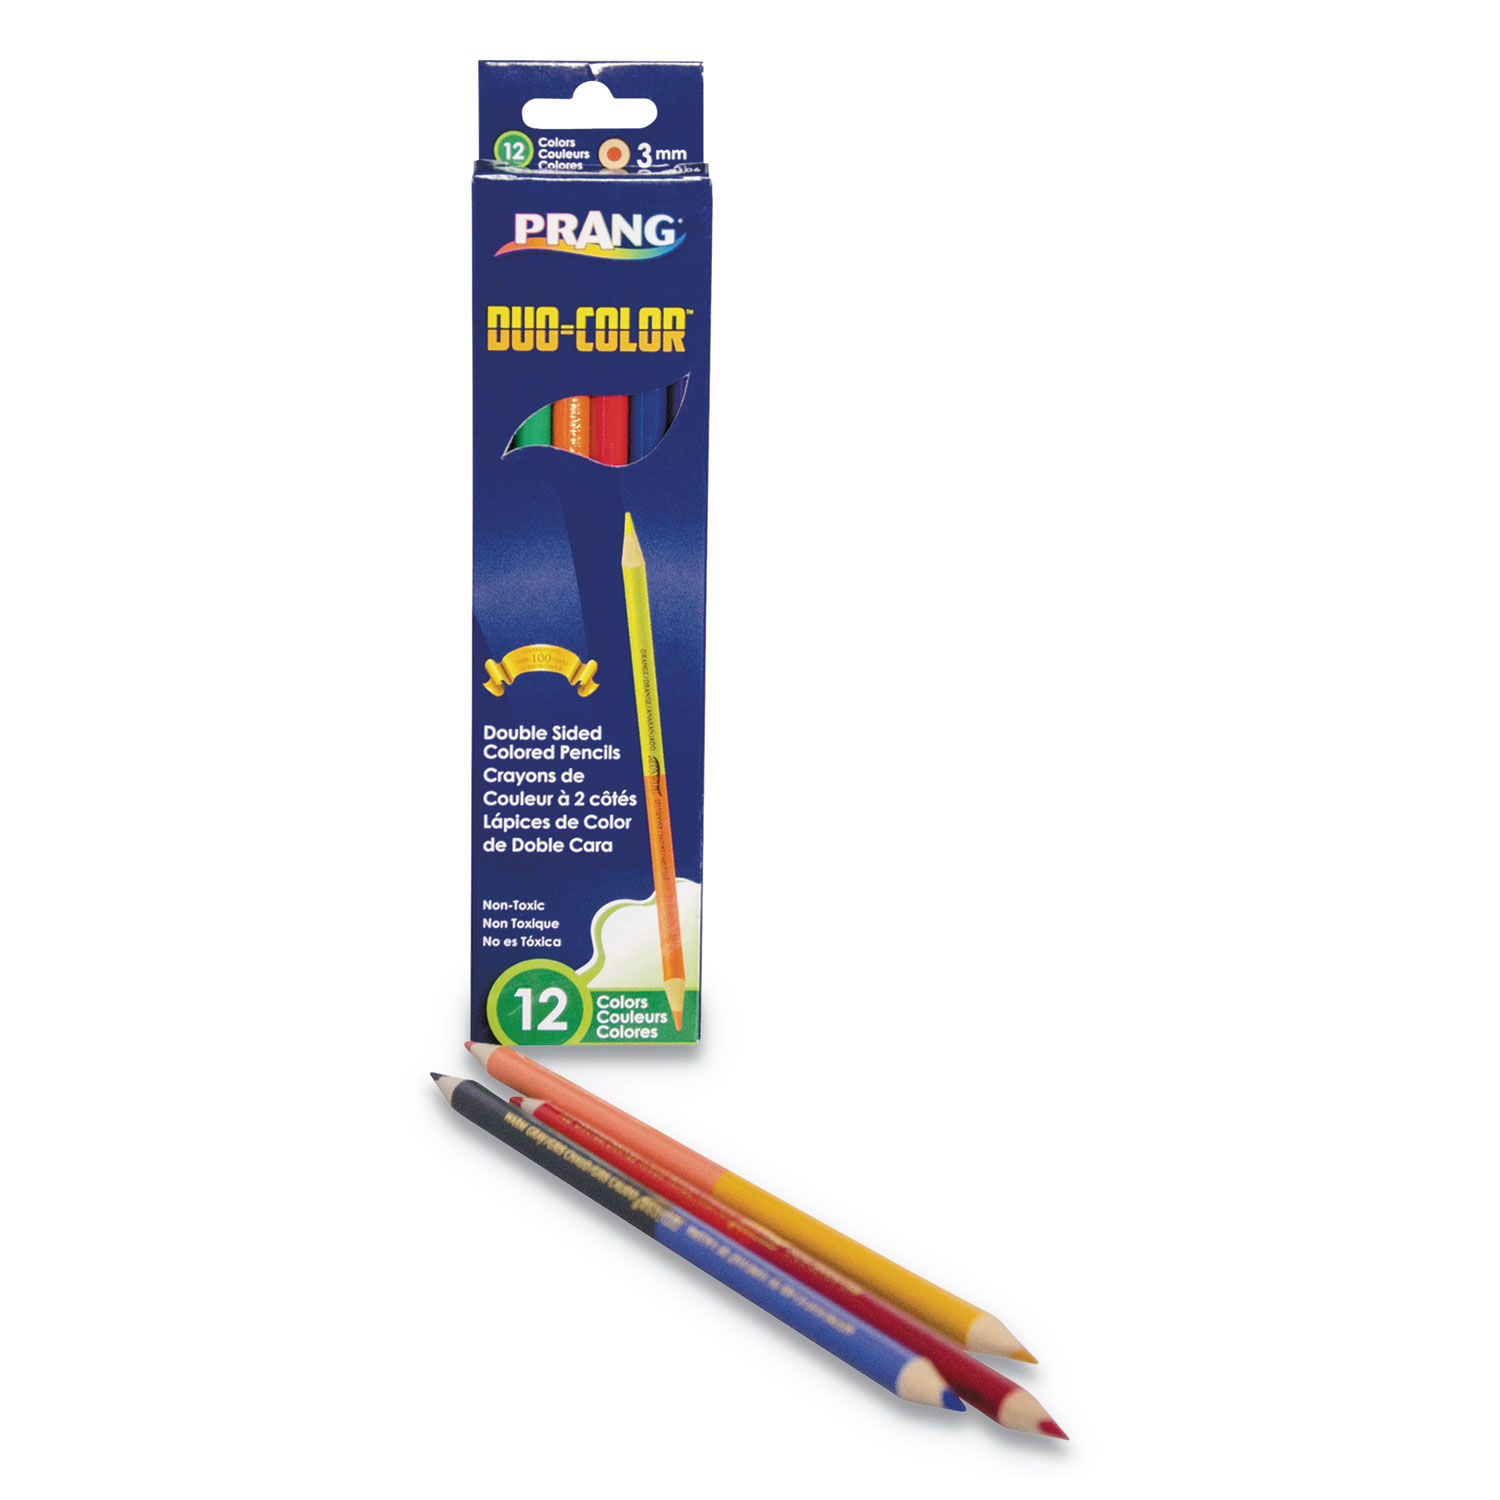 Erasable Colored Pencils, 15 Assorted Lead and Barrel Colors, 15